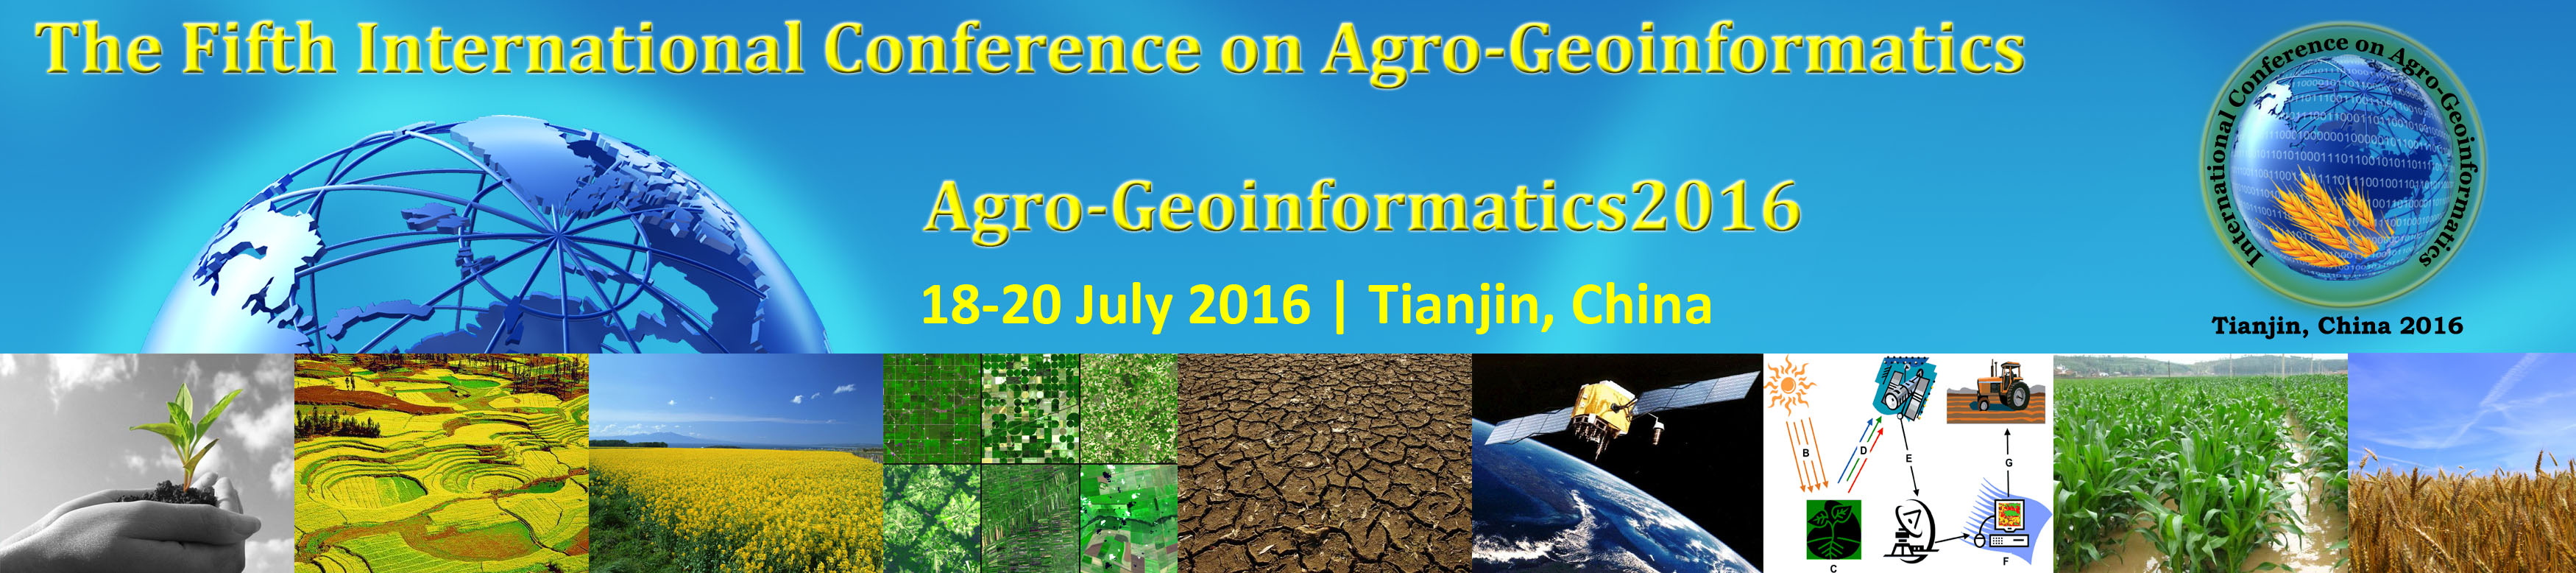 Agro-Geoinformatics 2016